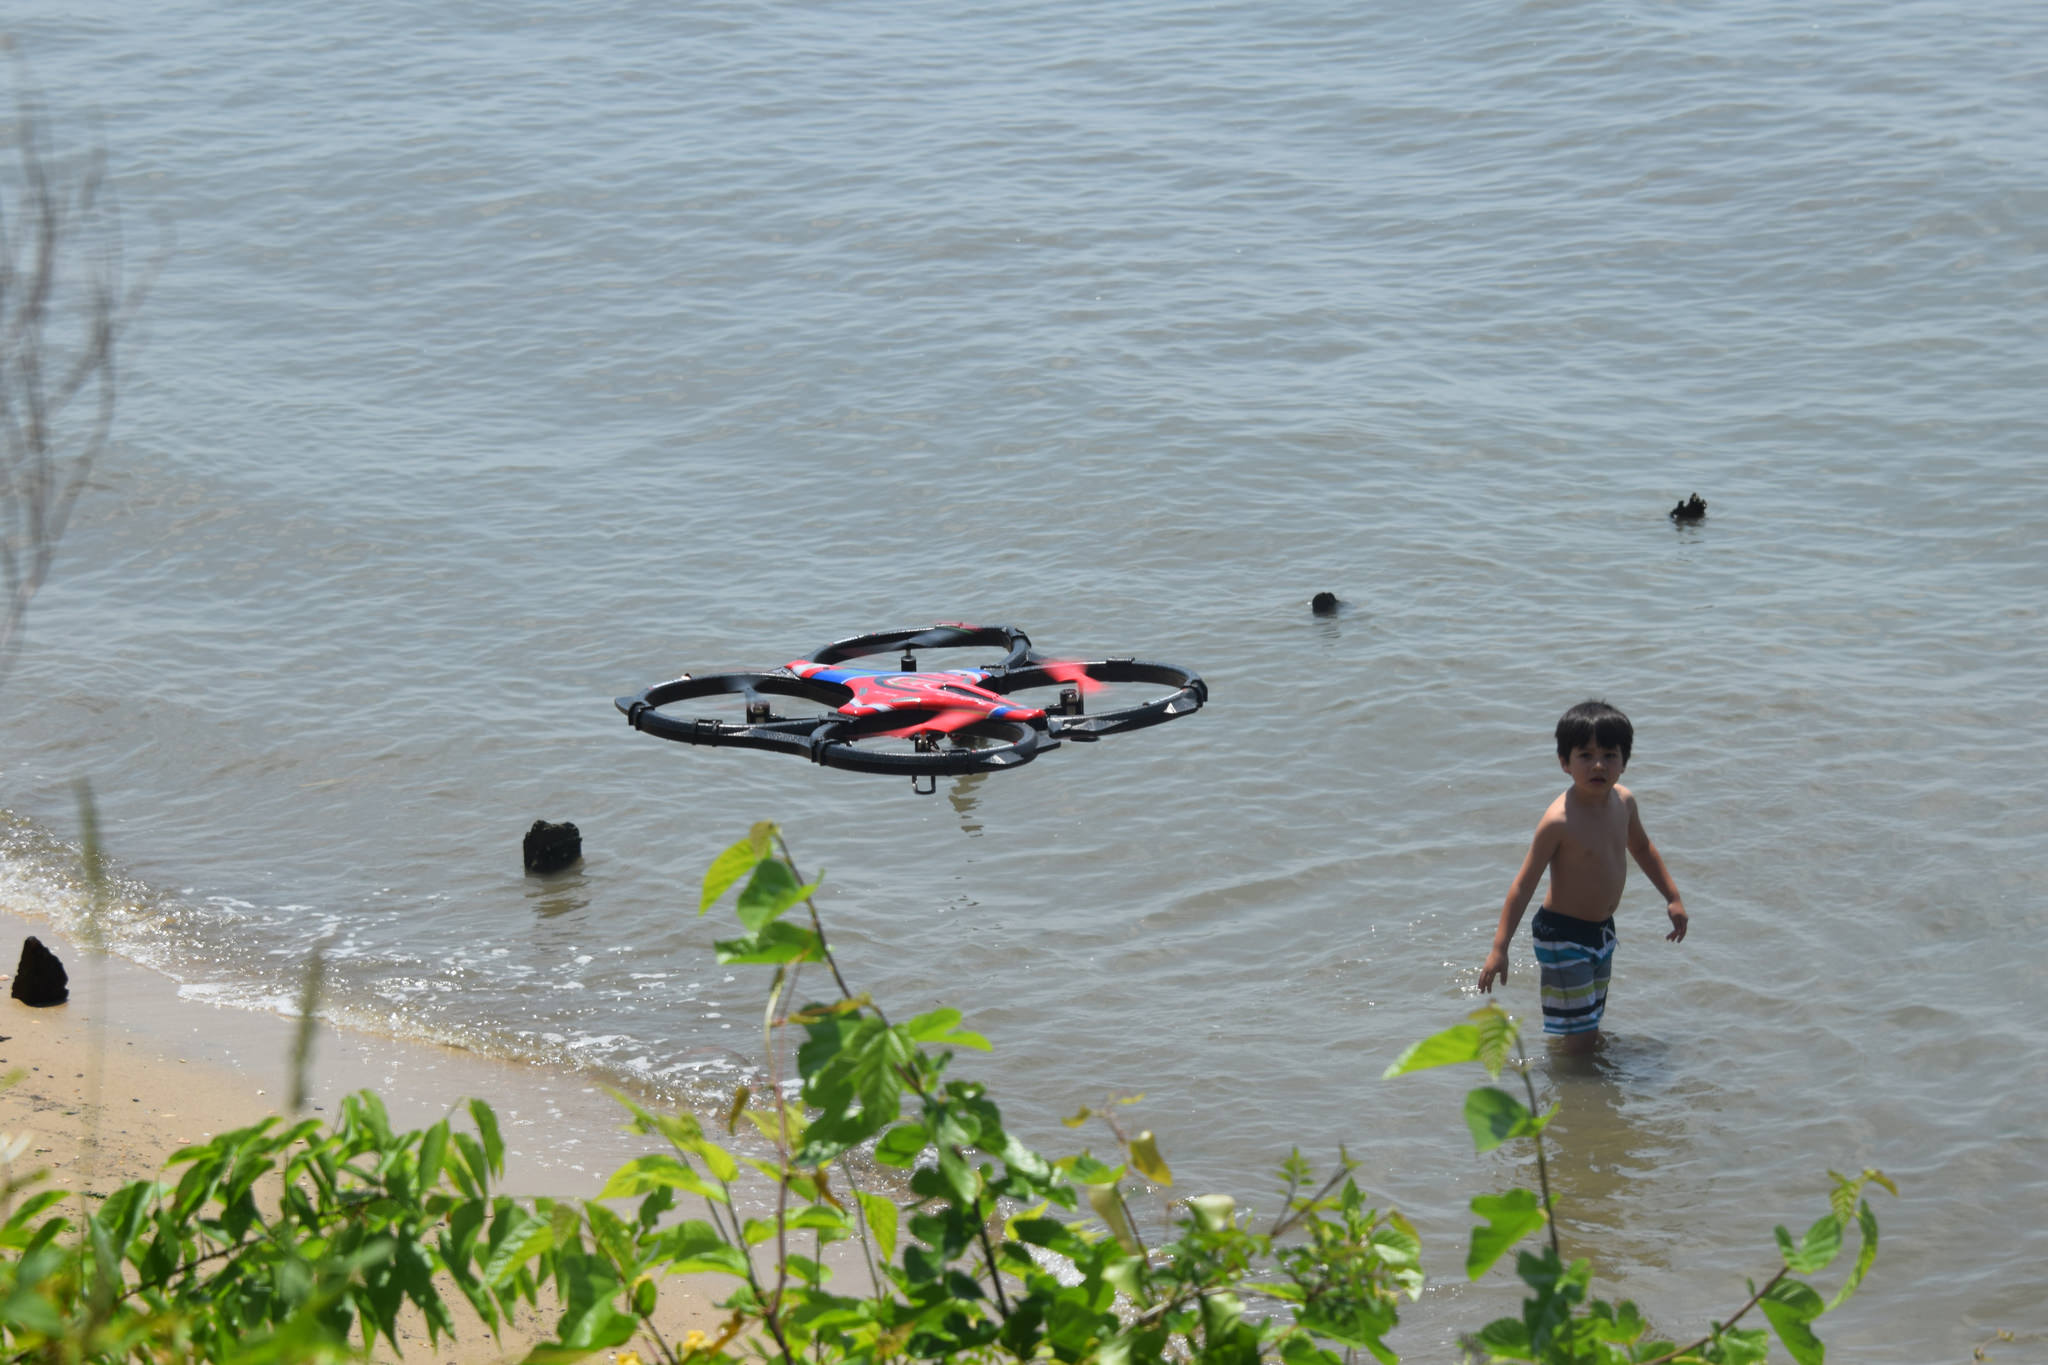 A drone in use near a beach. (Photo: Tony Alter/Flickr)